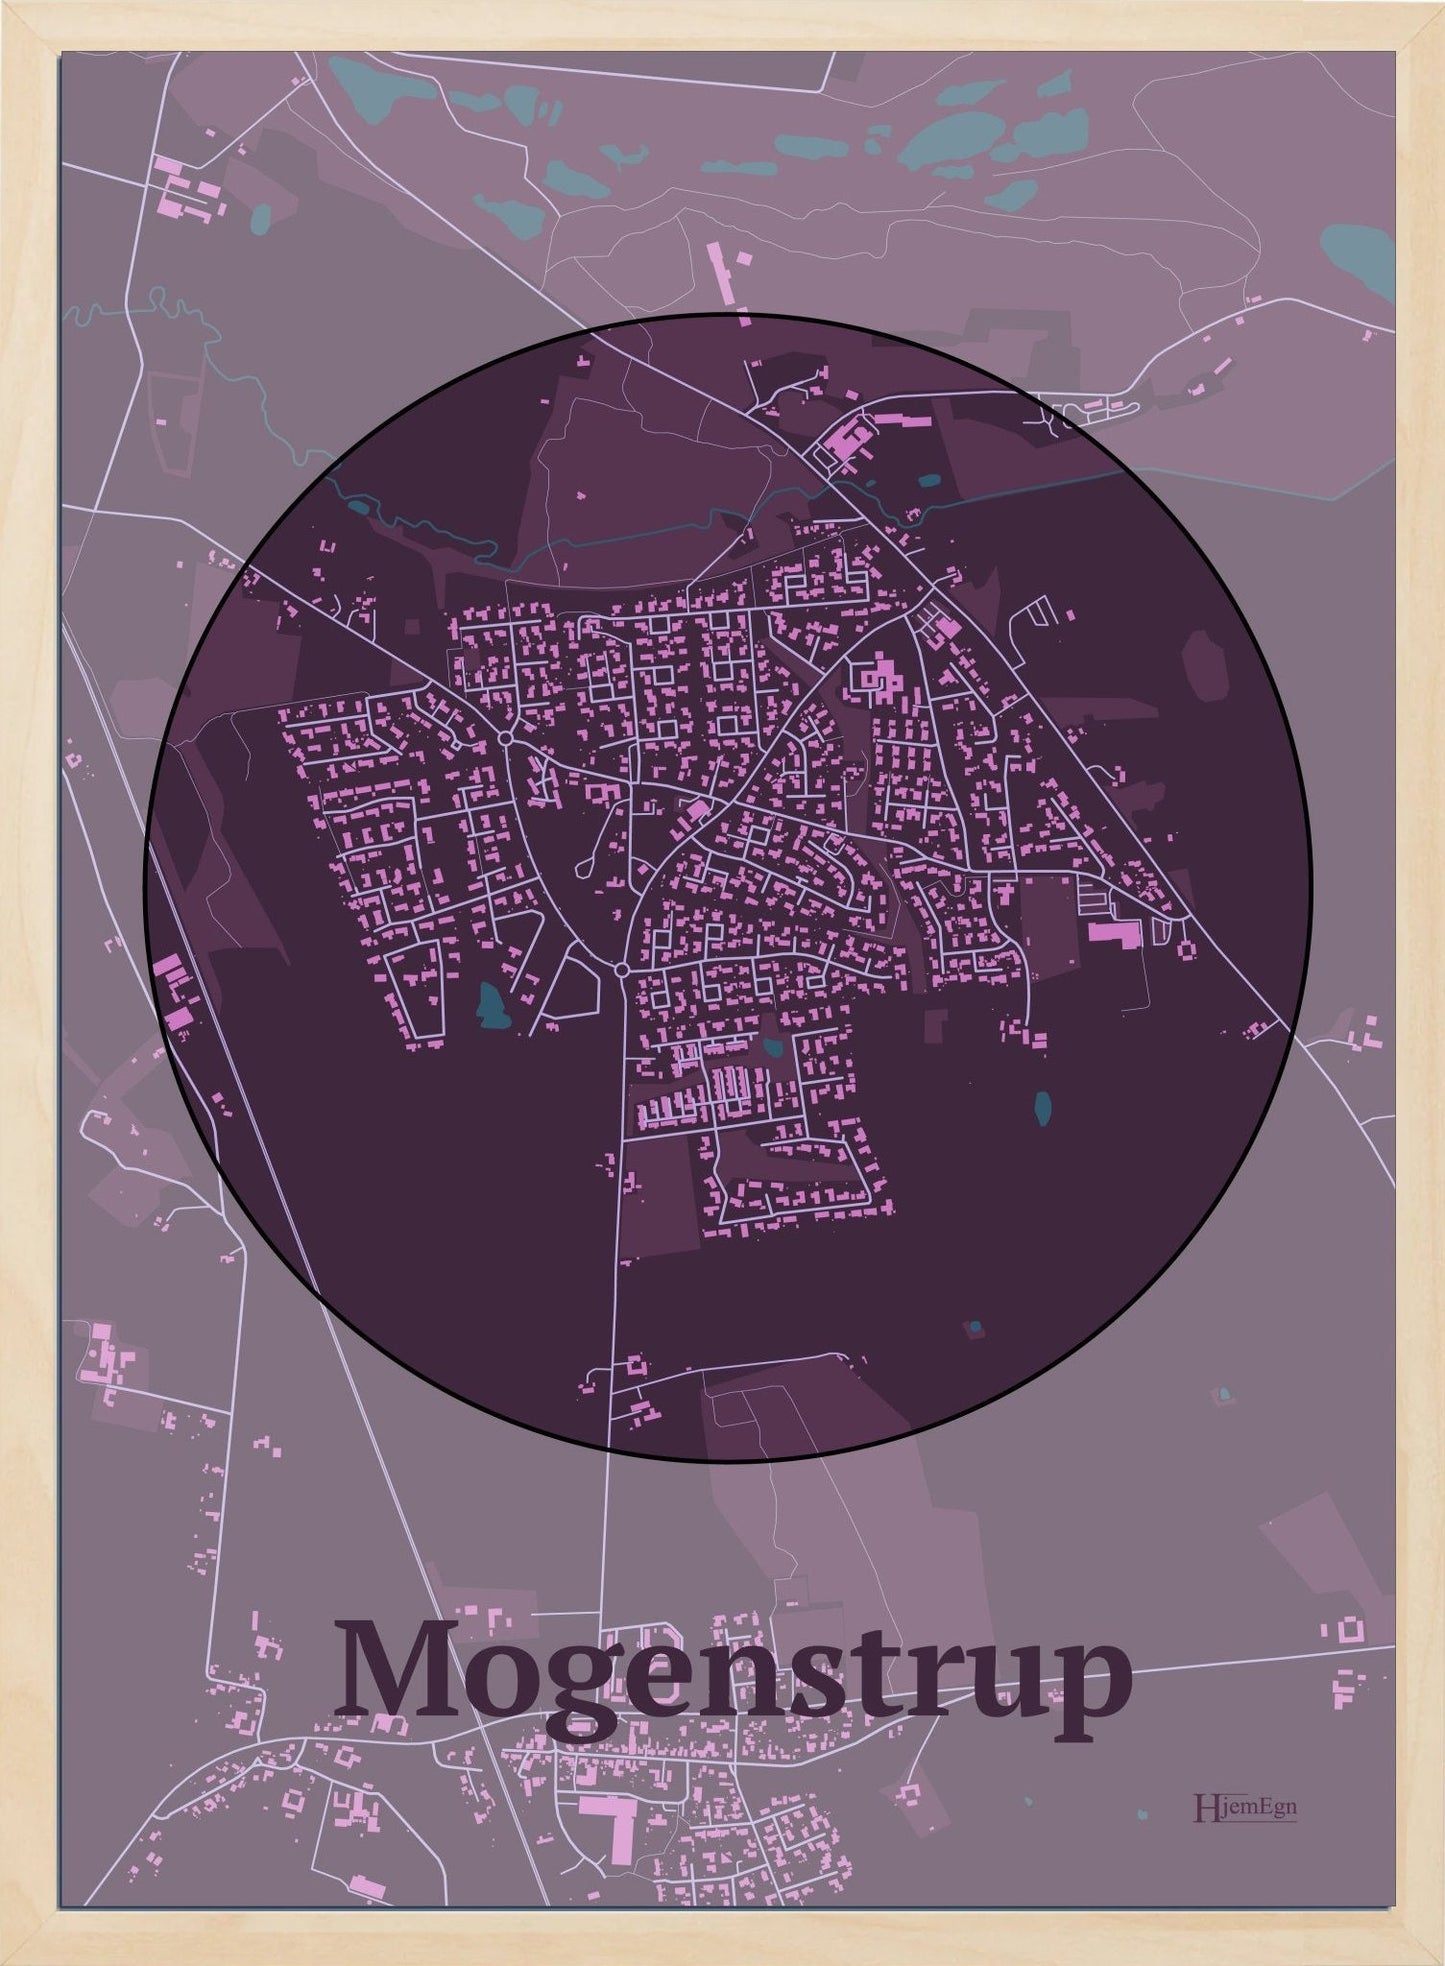 Mogenstrup plakat i farve mørk rød og HjemEgn.dk design centrum. Design bykort for Mogenstrup